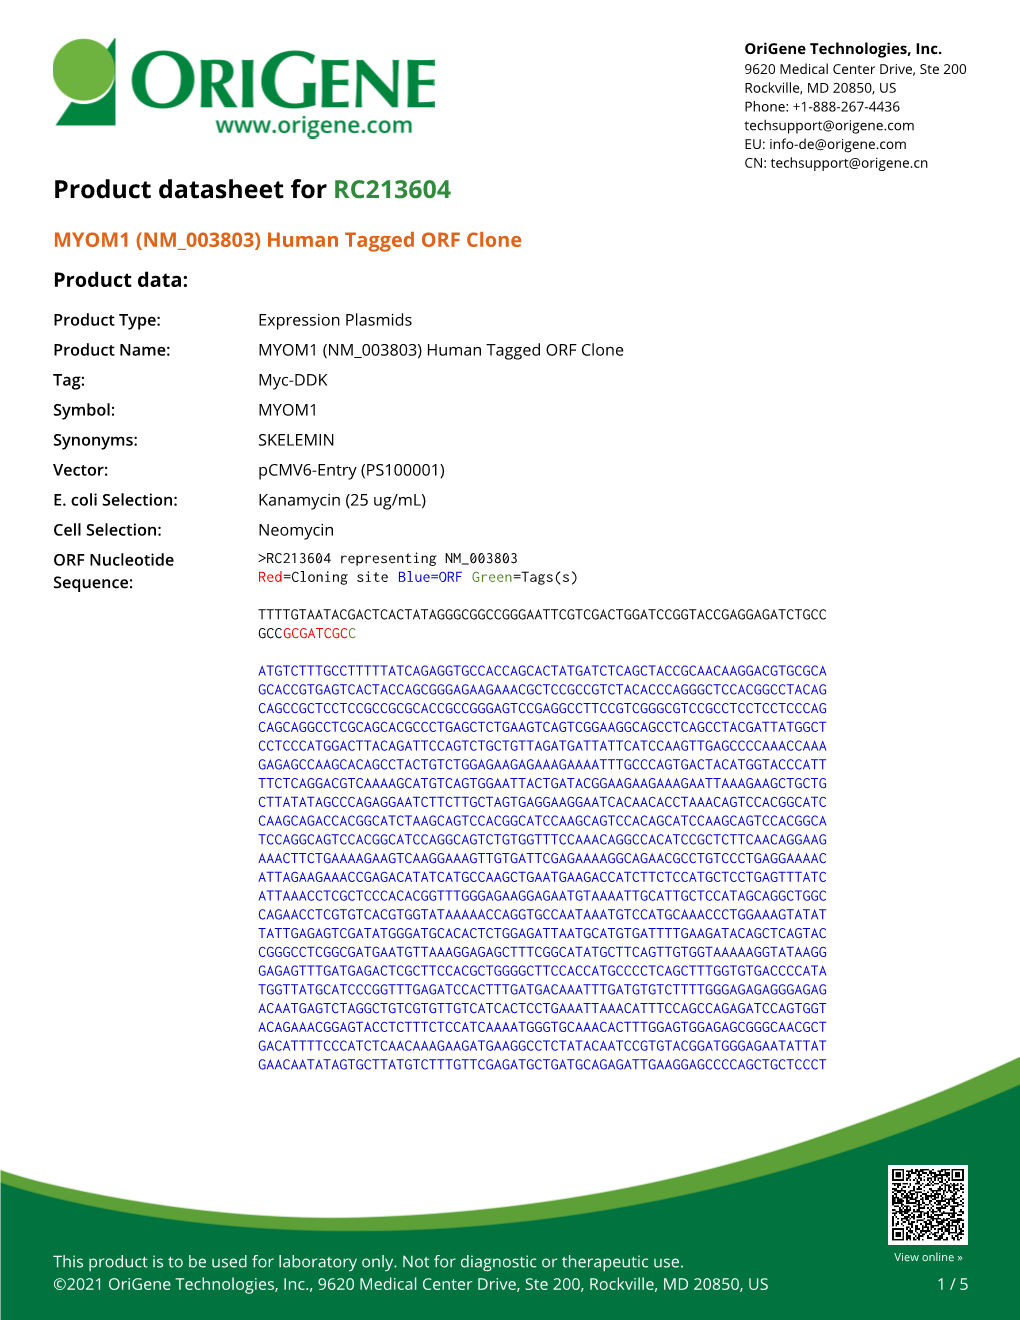 MYOM1 (NM 003803) Human Tagged ORF Clone Product Data